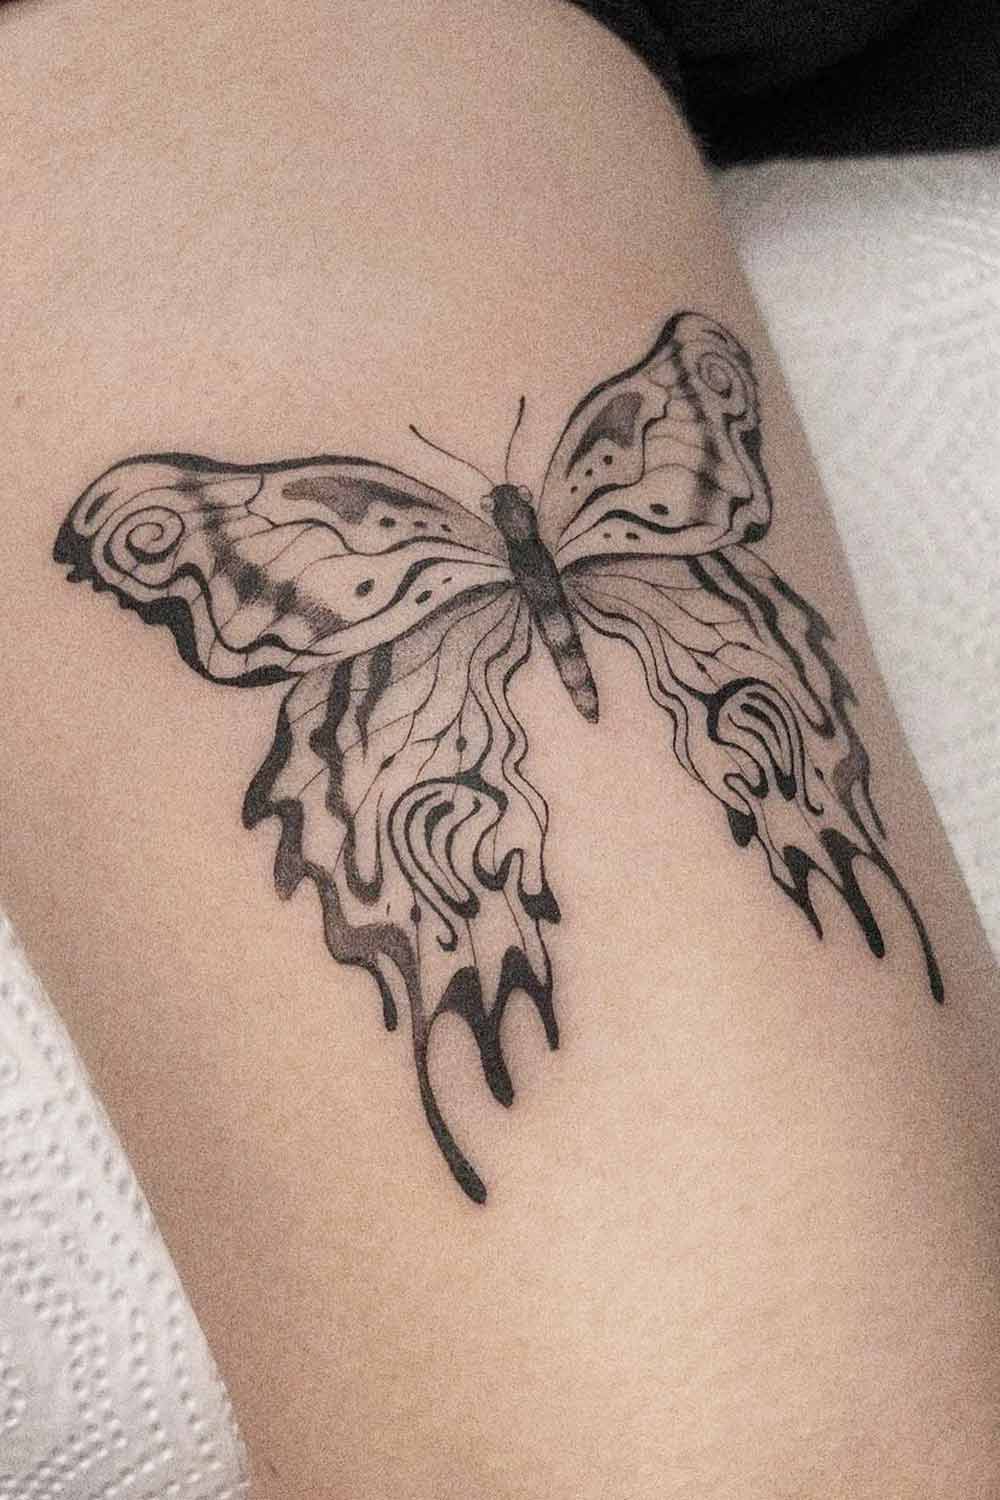 Psychodelic Butterfly Design